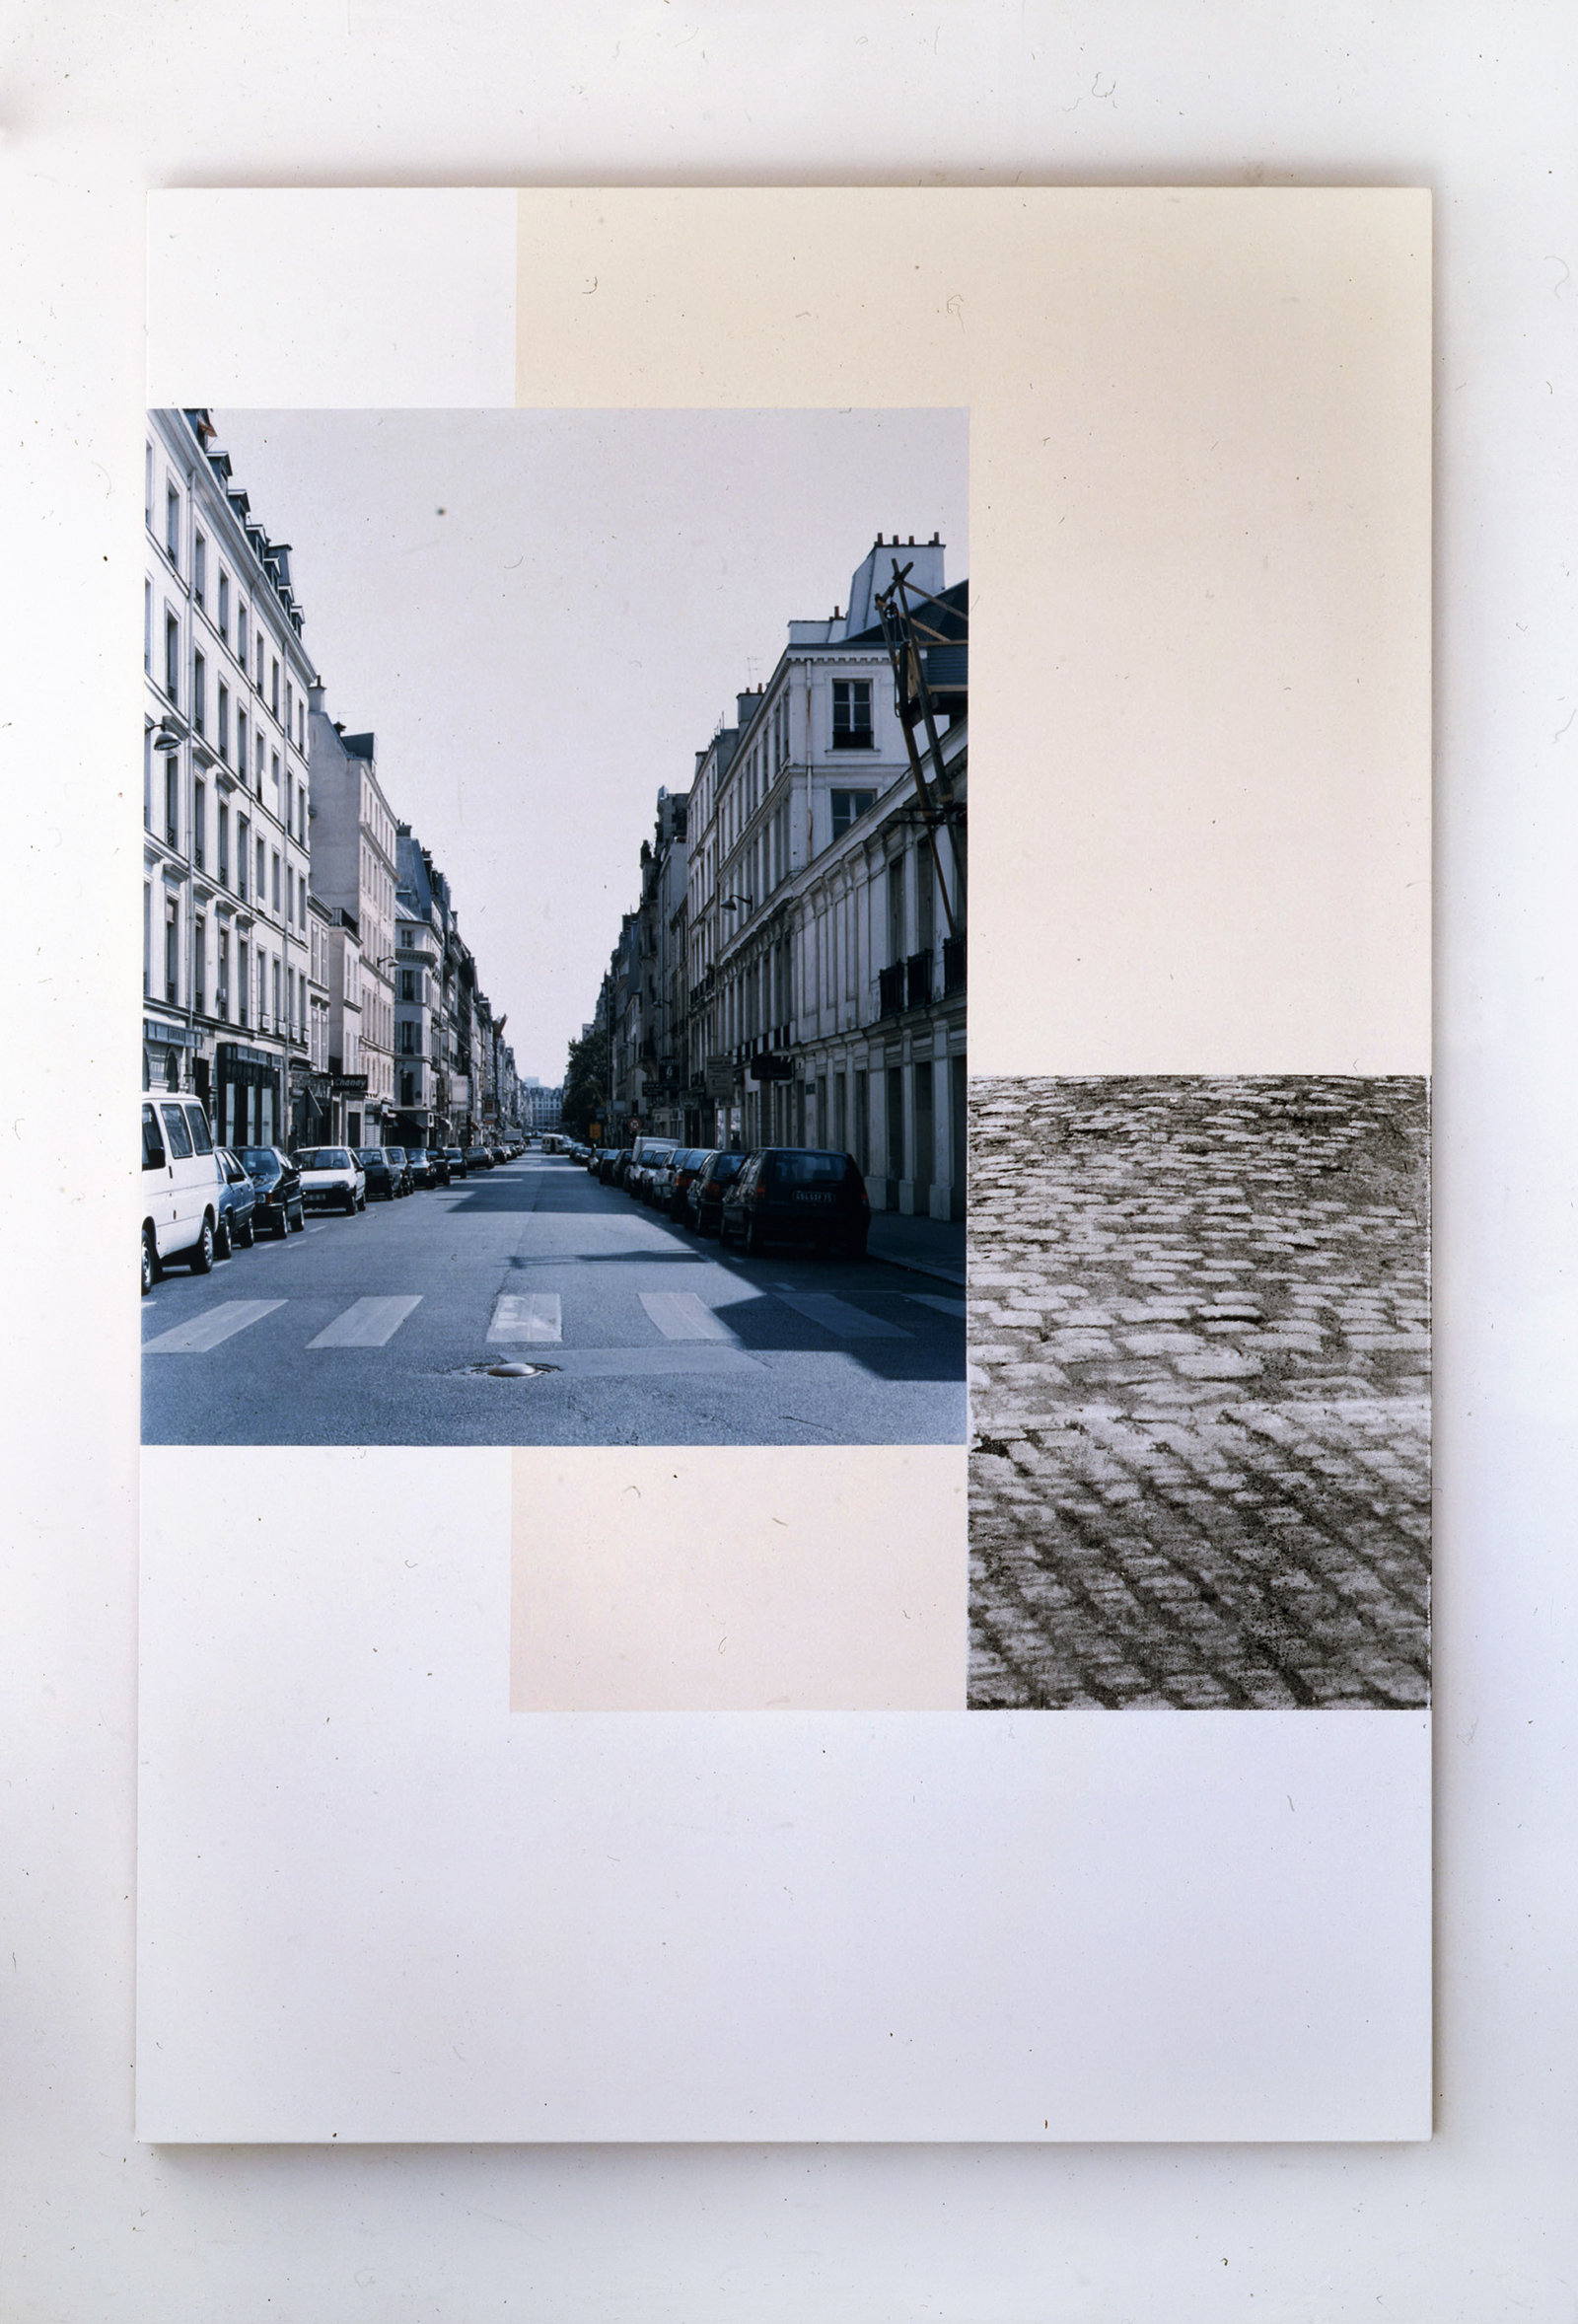 Ian Wallace, Rue Turenne, Paris, 1997, photolaminate, acrylic and silkscreen on canvas, 90 x 60 in. (229 x 152 cm)